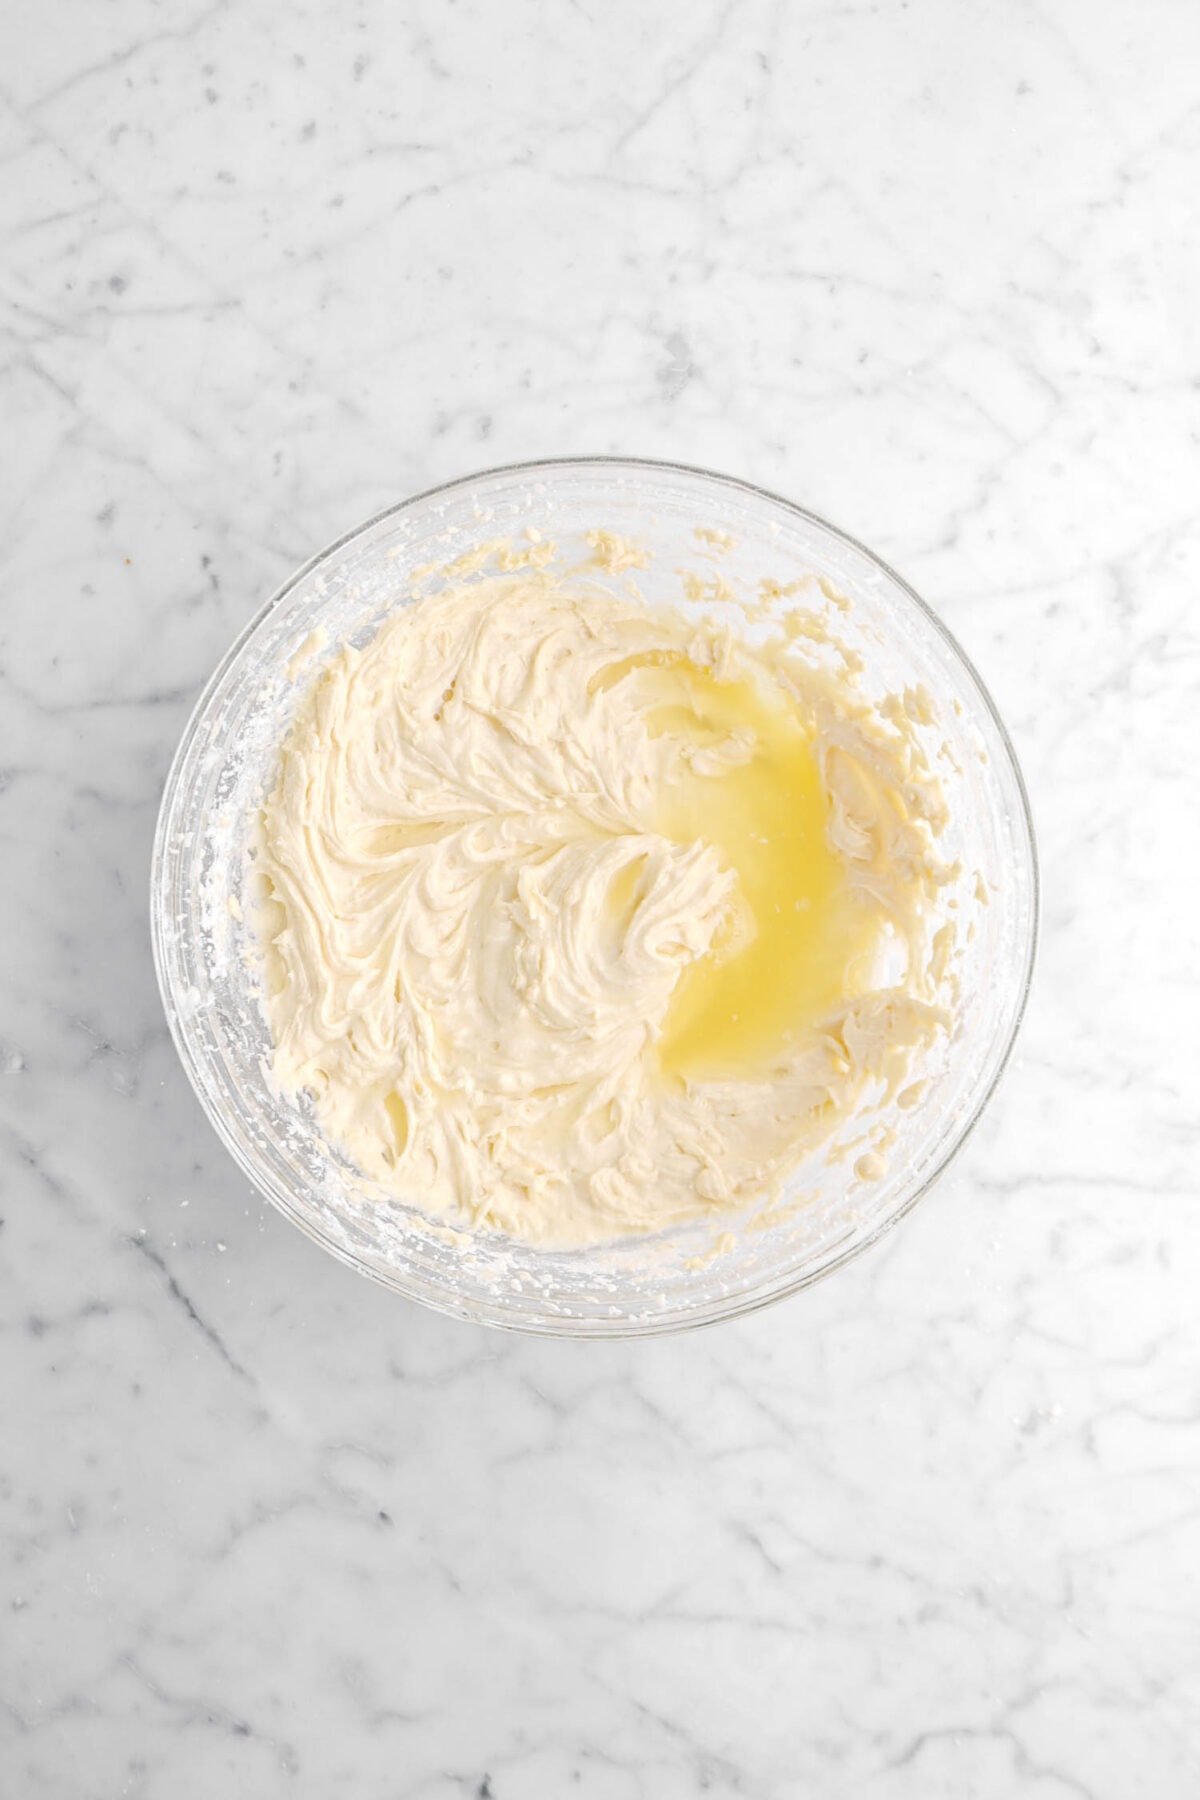 lemon juice and cake batter in glass bowl